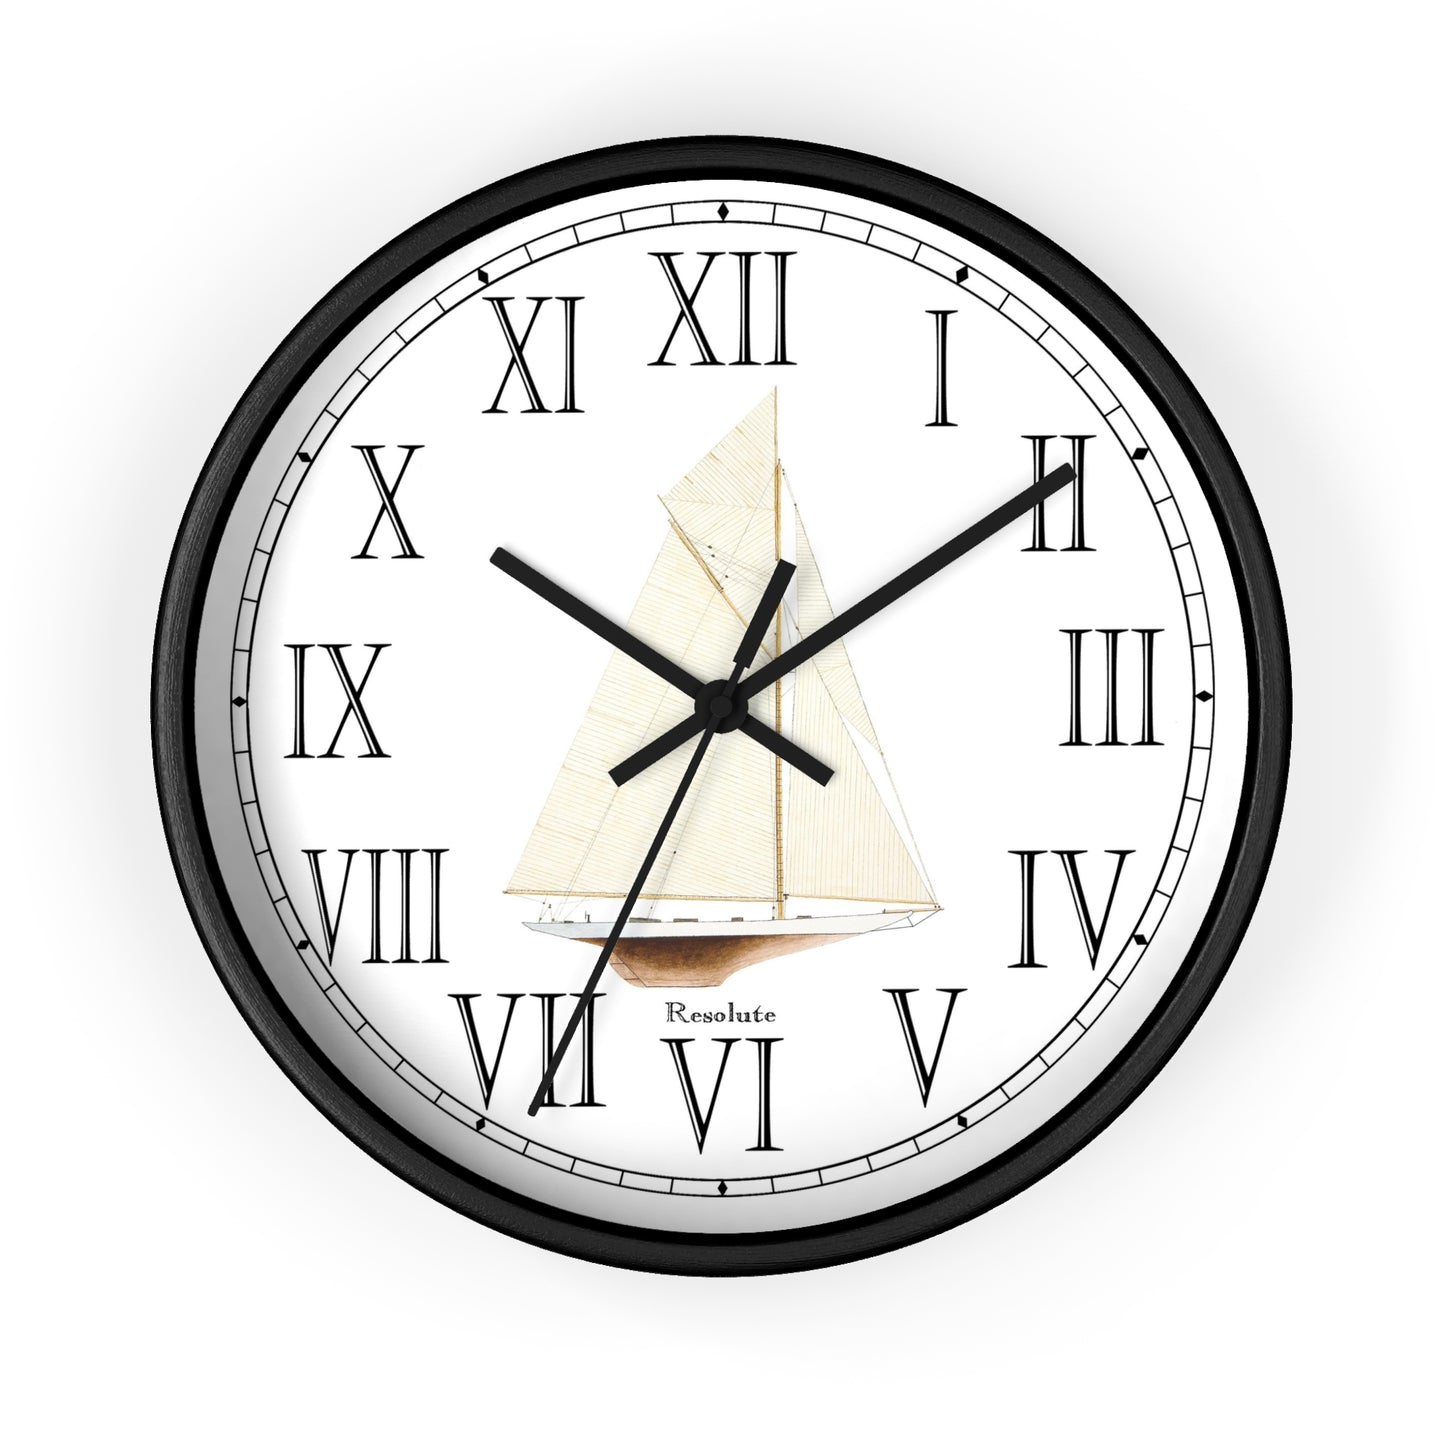 Resolute Roman Numeral Clock